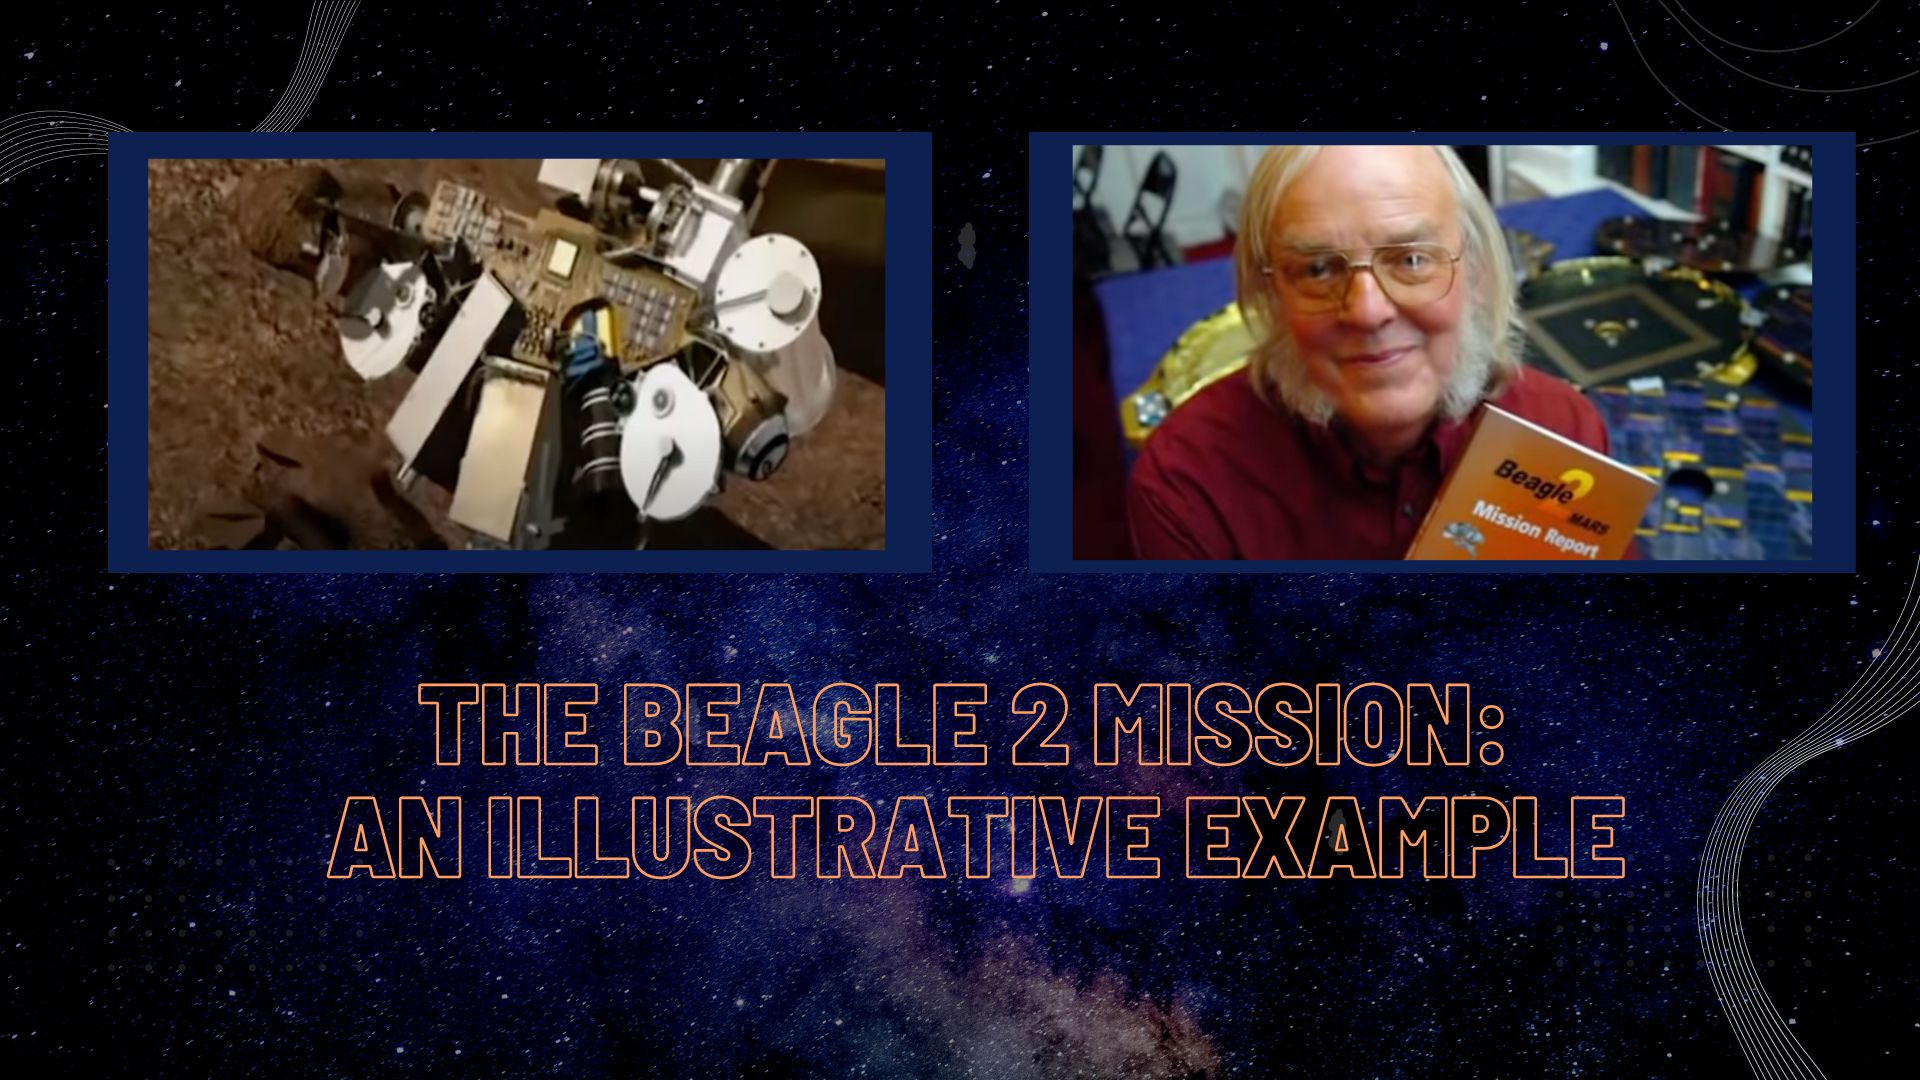 Beagle 2 Mission to Mars